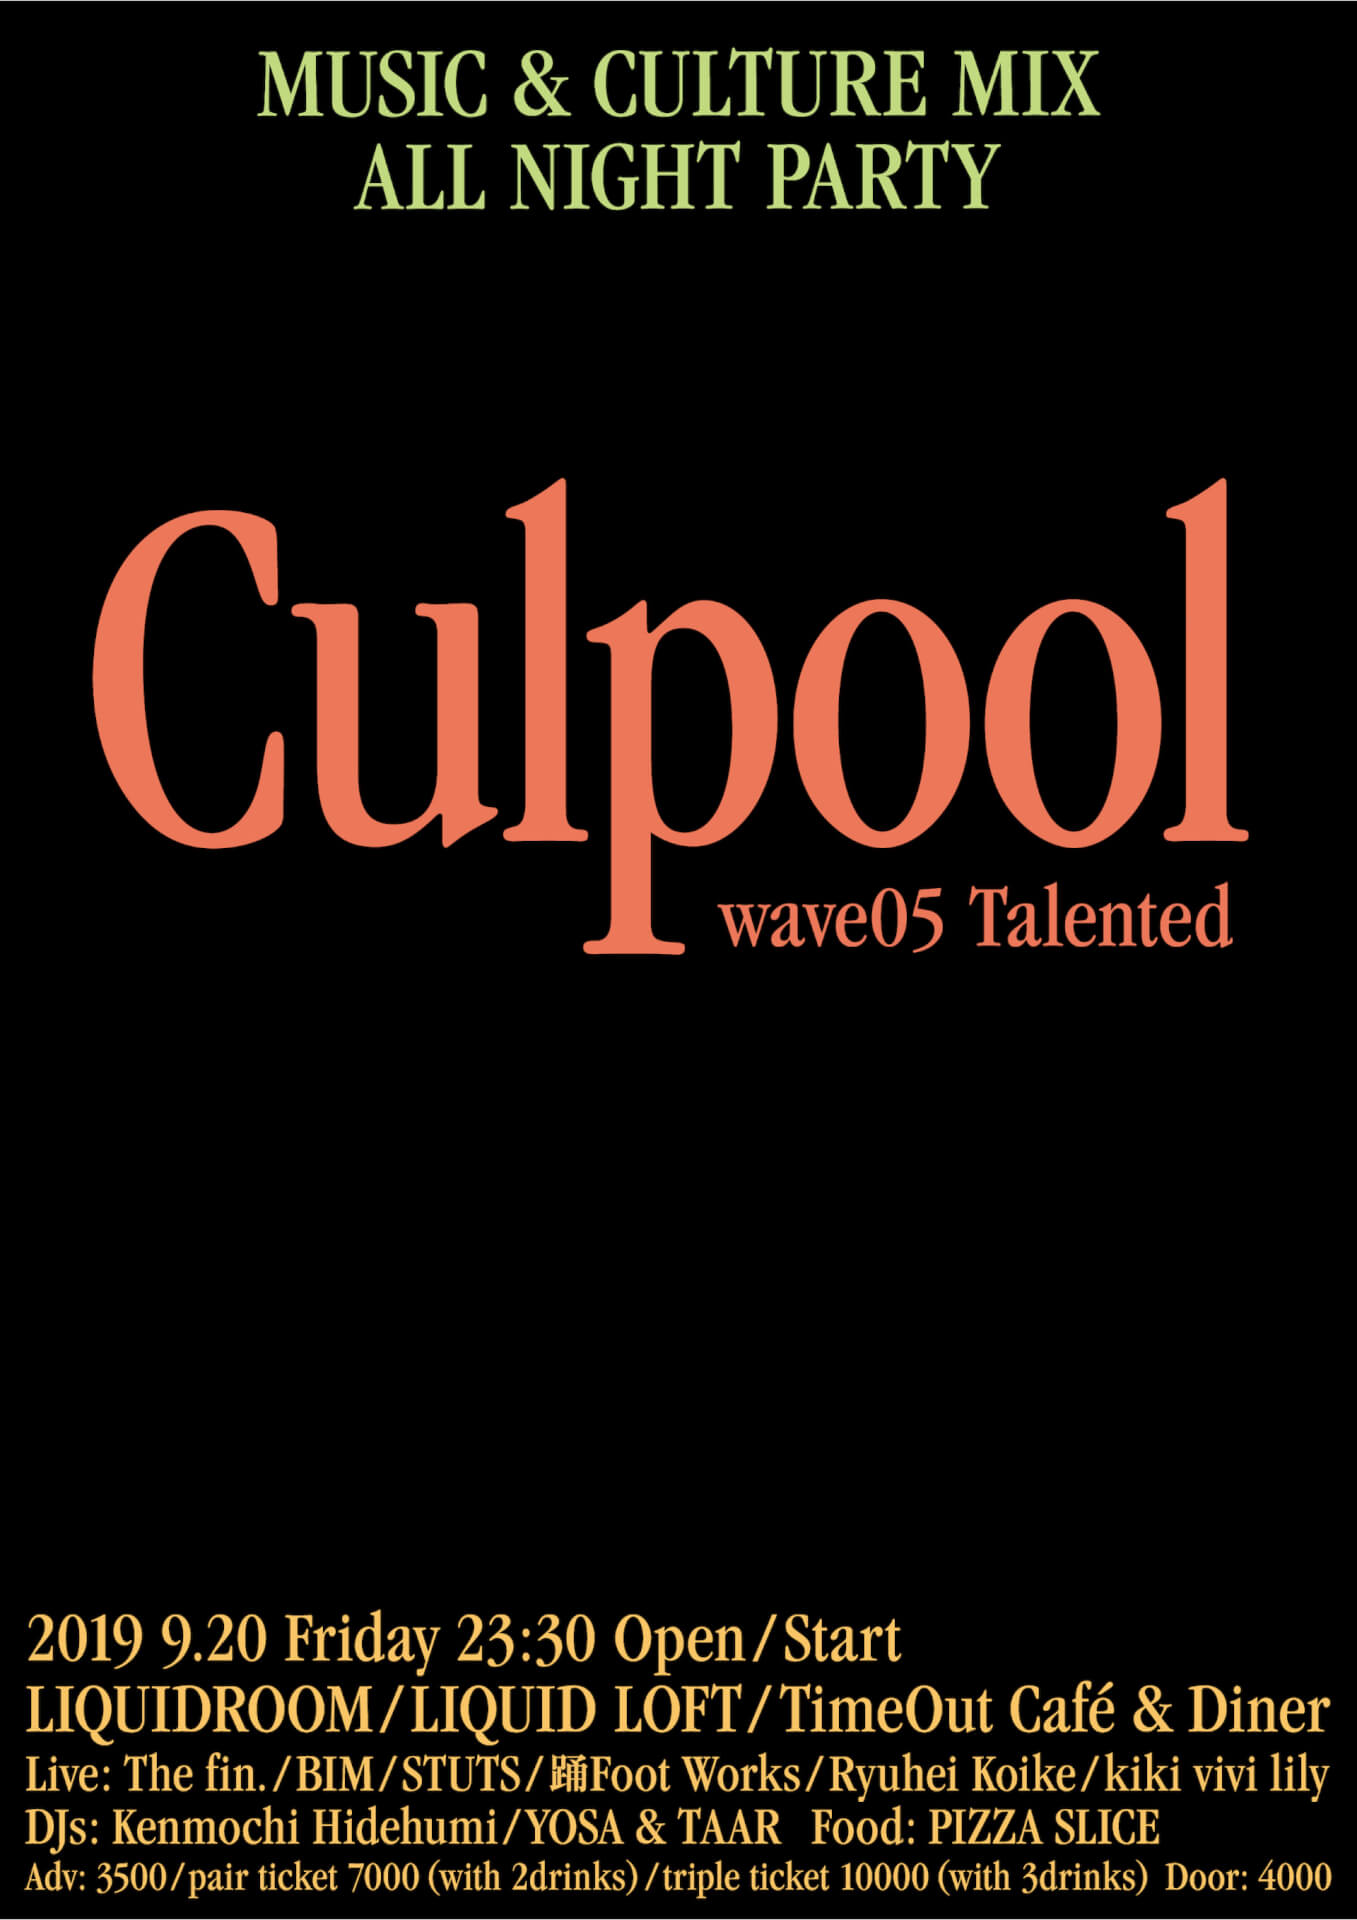 「CULPOOL」開催まであと1ヶ月！STUTS、踊Foot Works、kiki vivi lilyらの出演、PIZZA SLICEの出店が決定 music190821-culpool-4